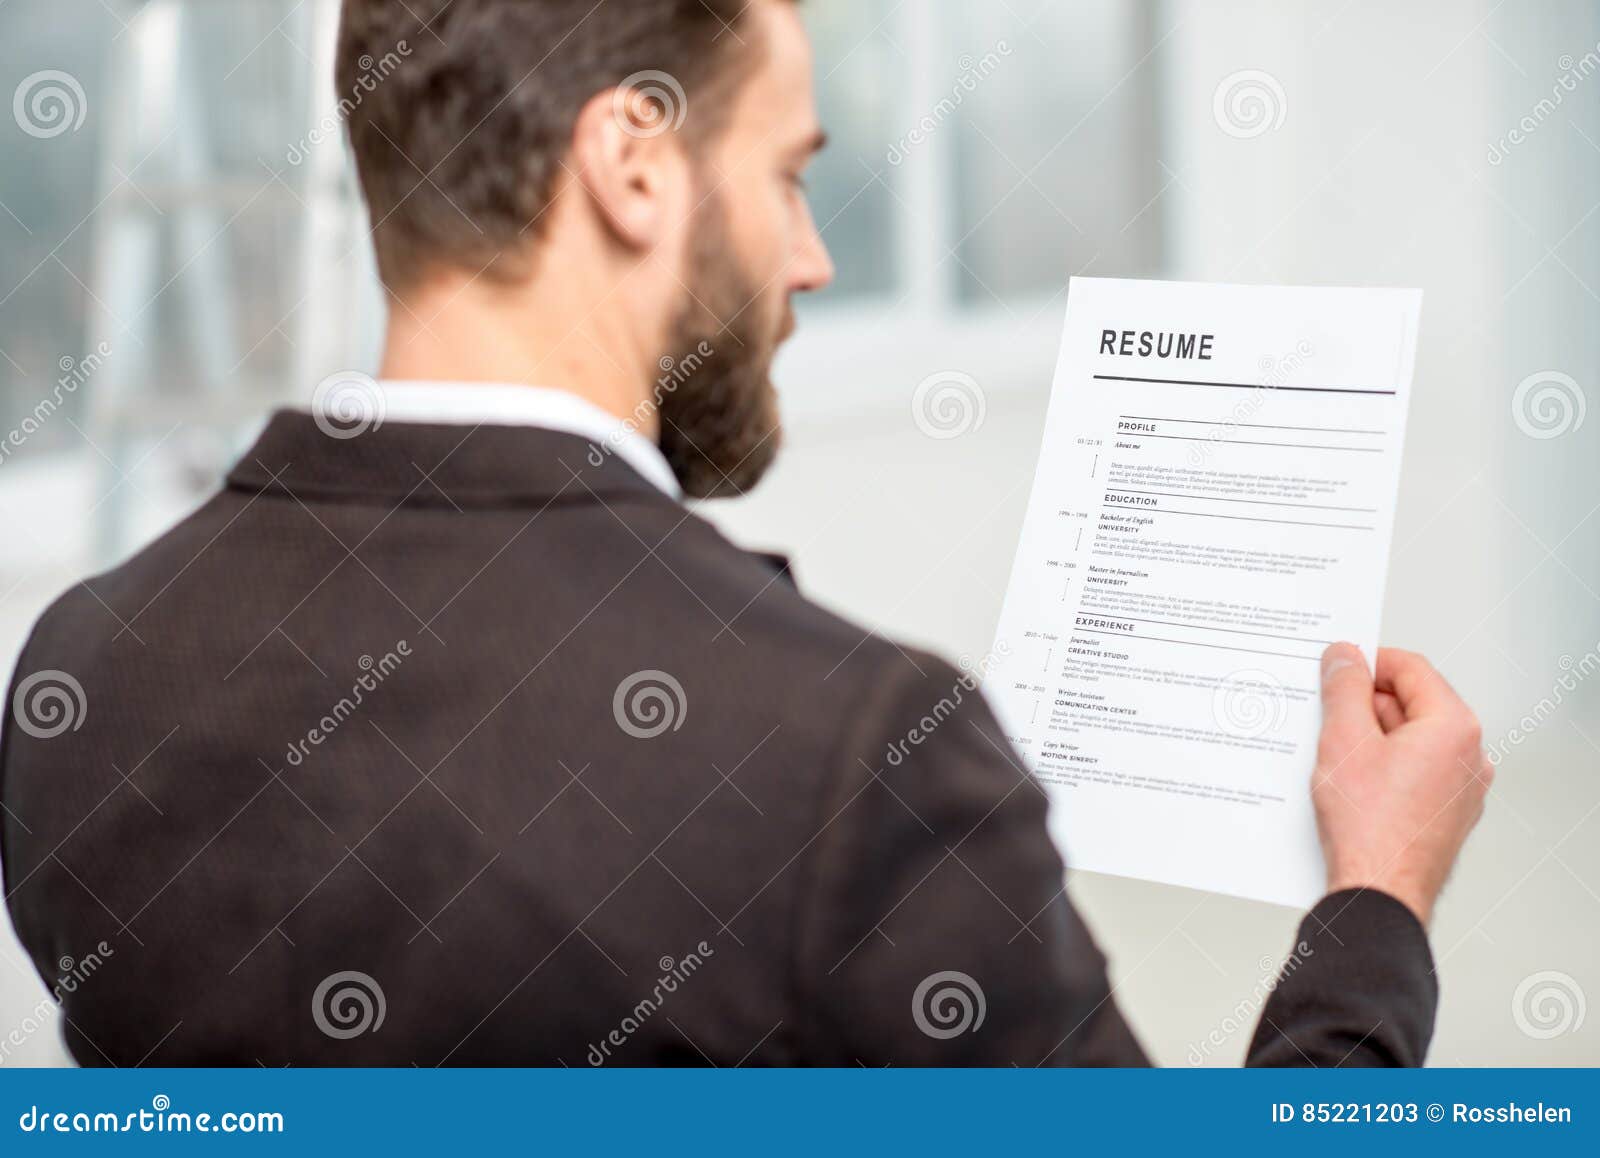 Holding resume paper stock photo. Image of recruitment - 85195166